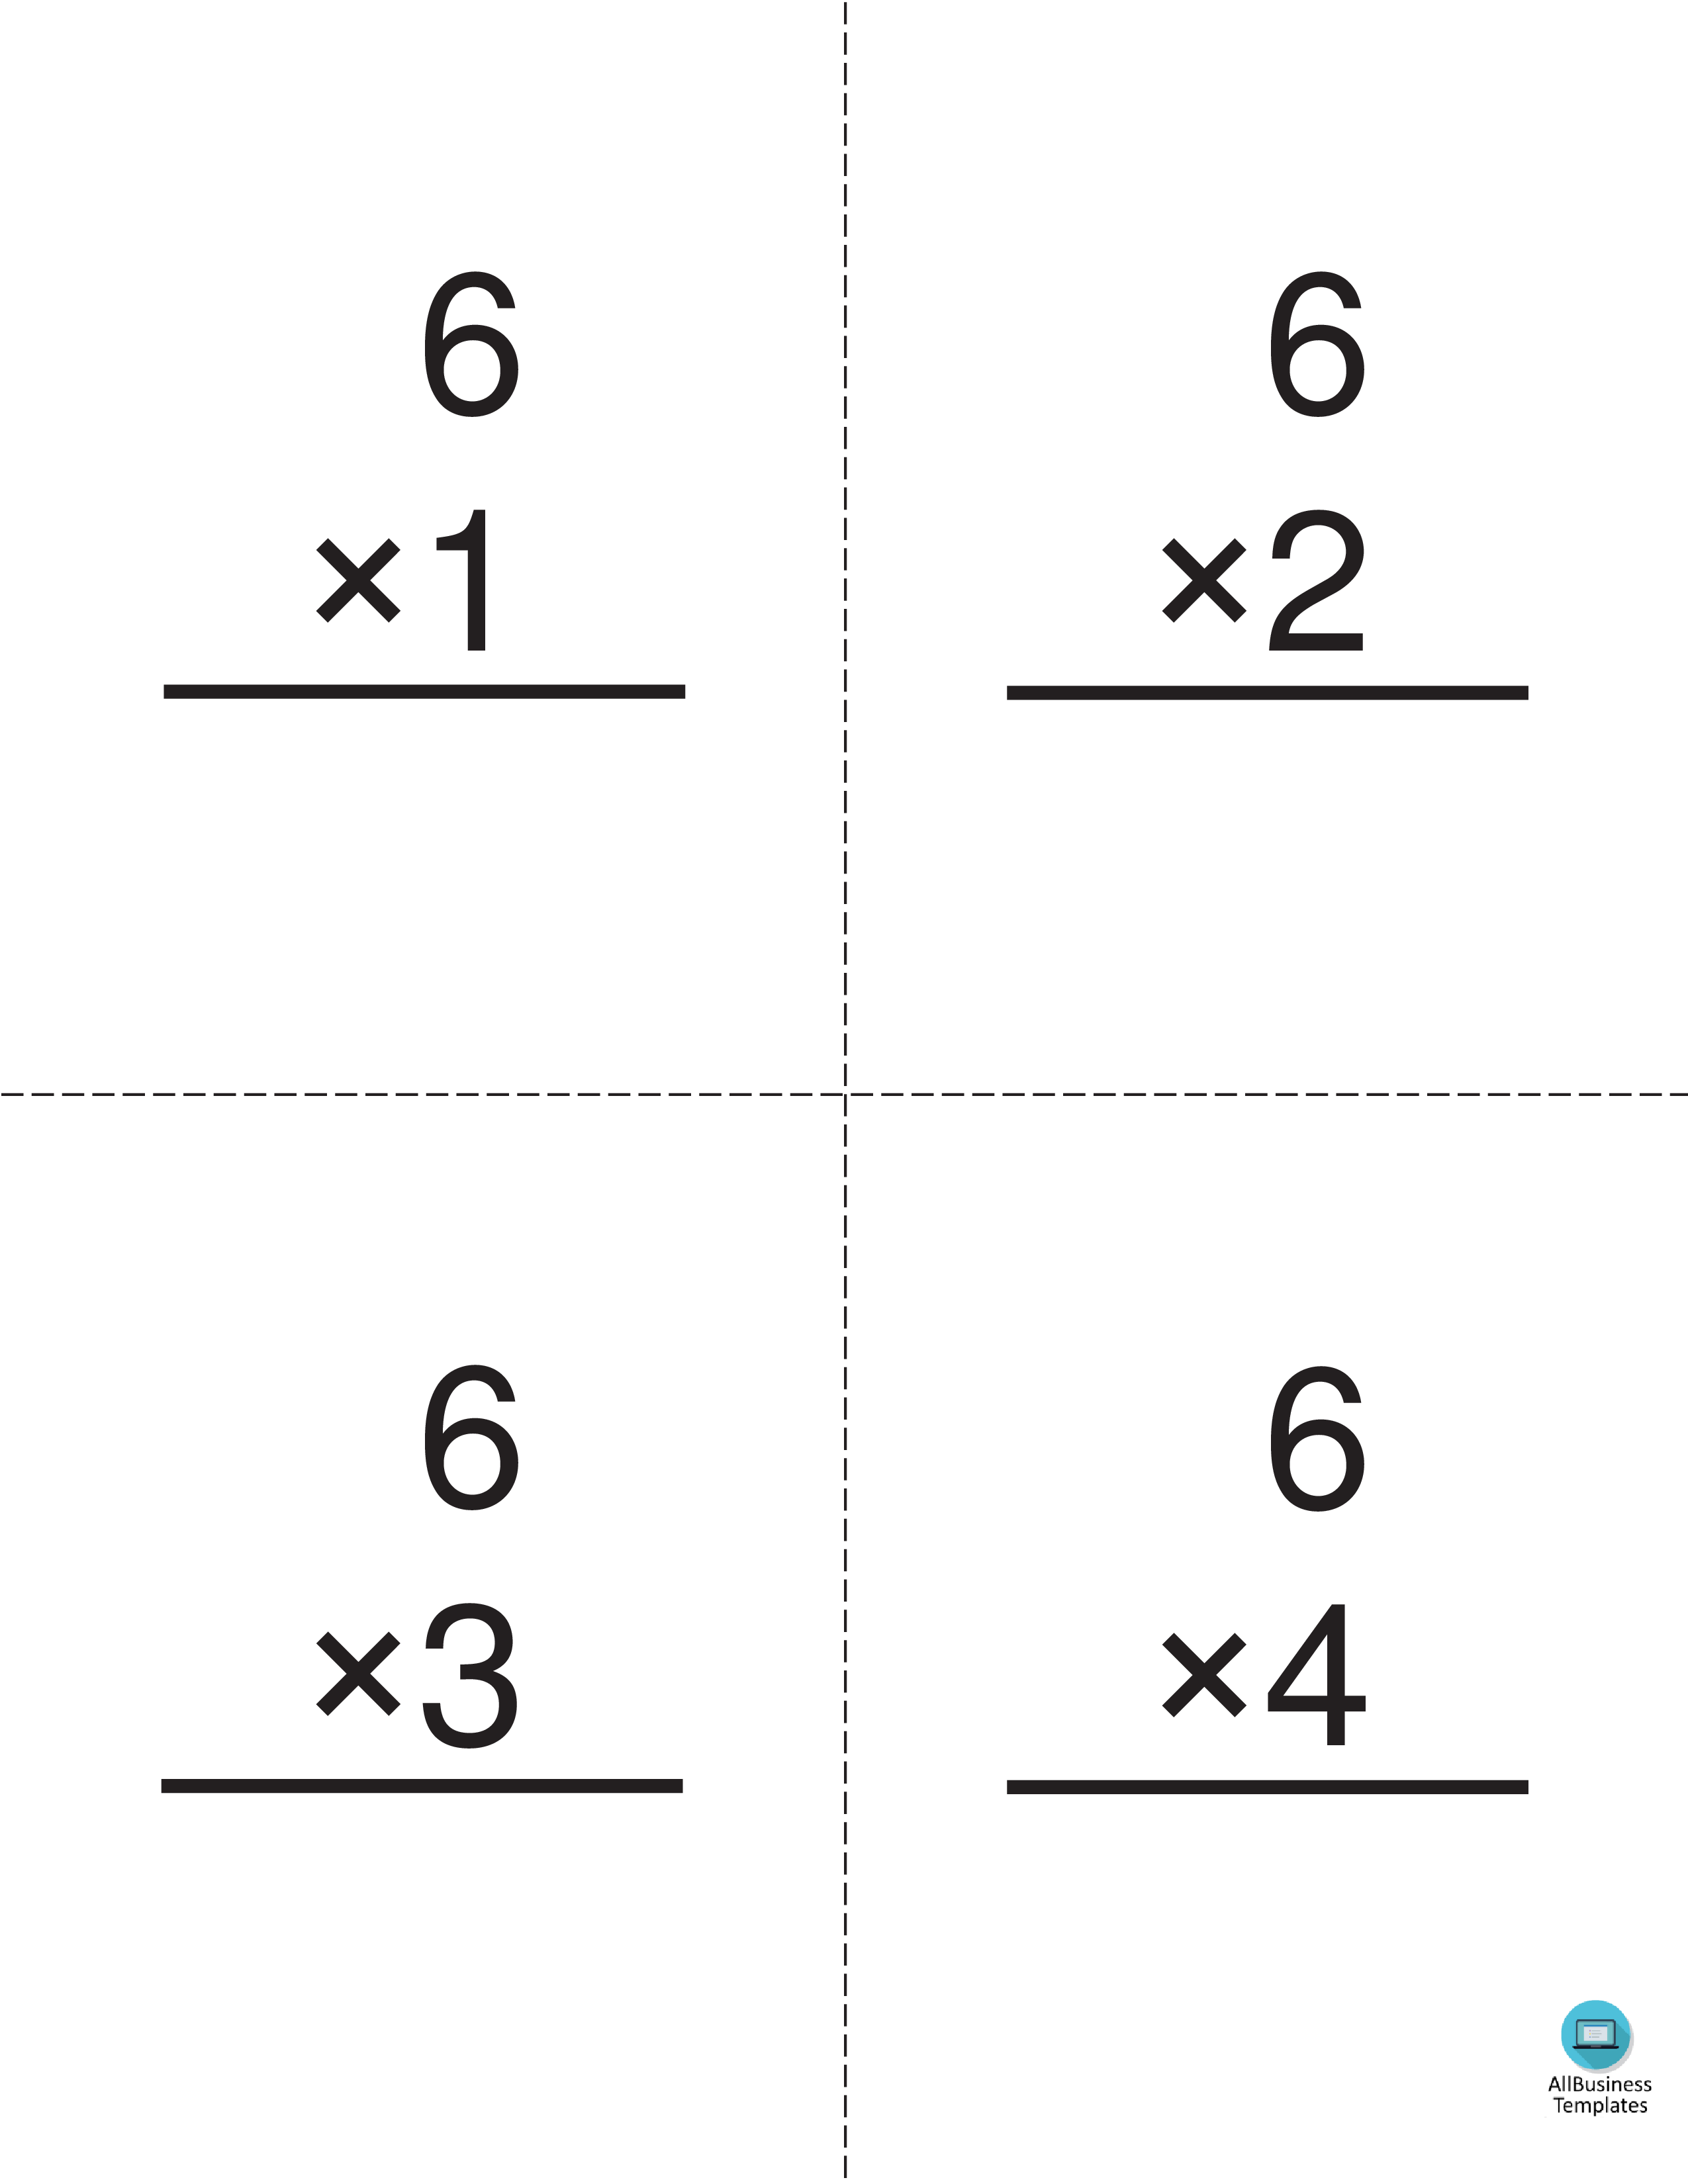 multiplication times 6 flashcards plantilla imagen principal